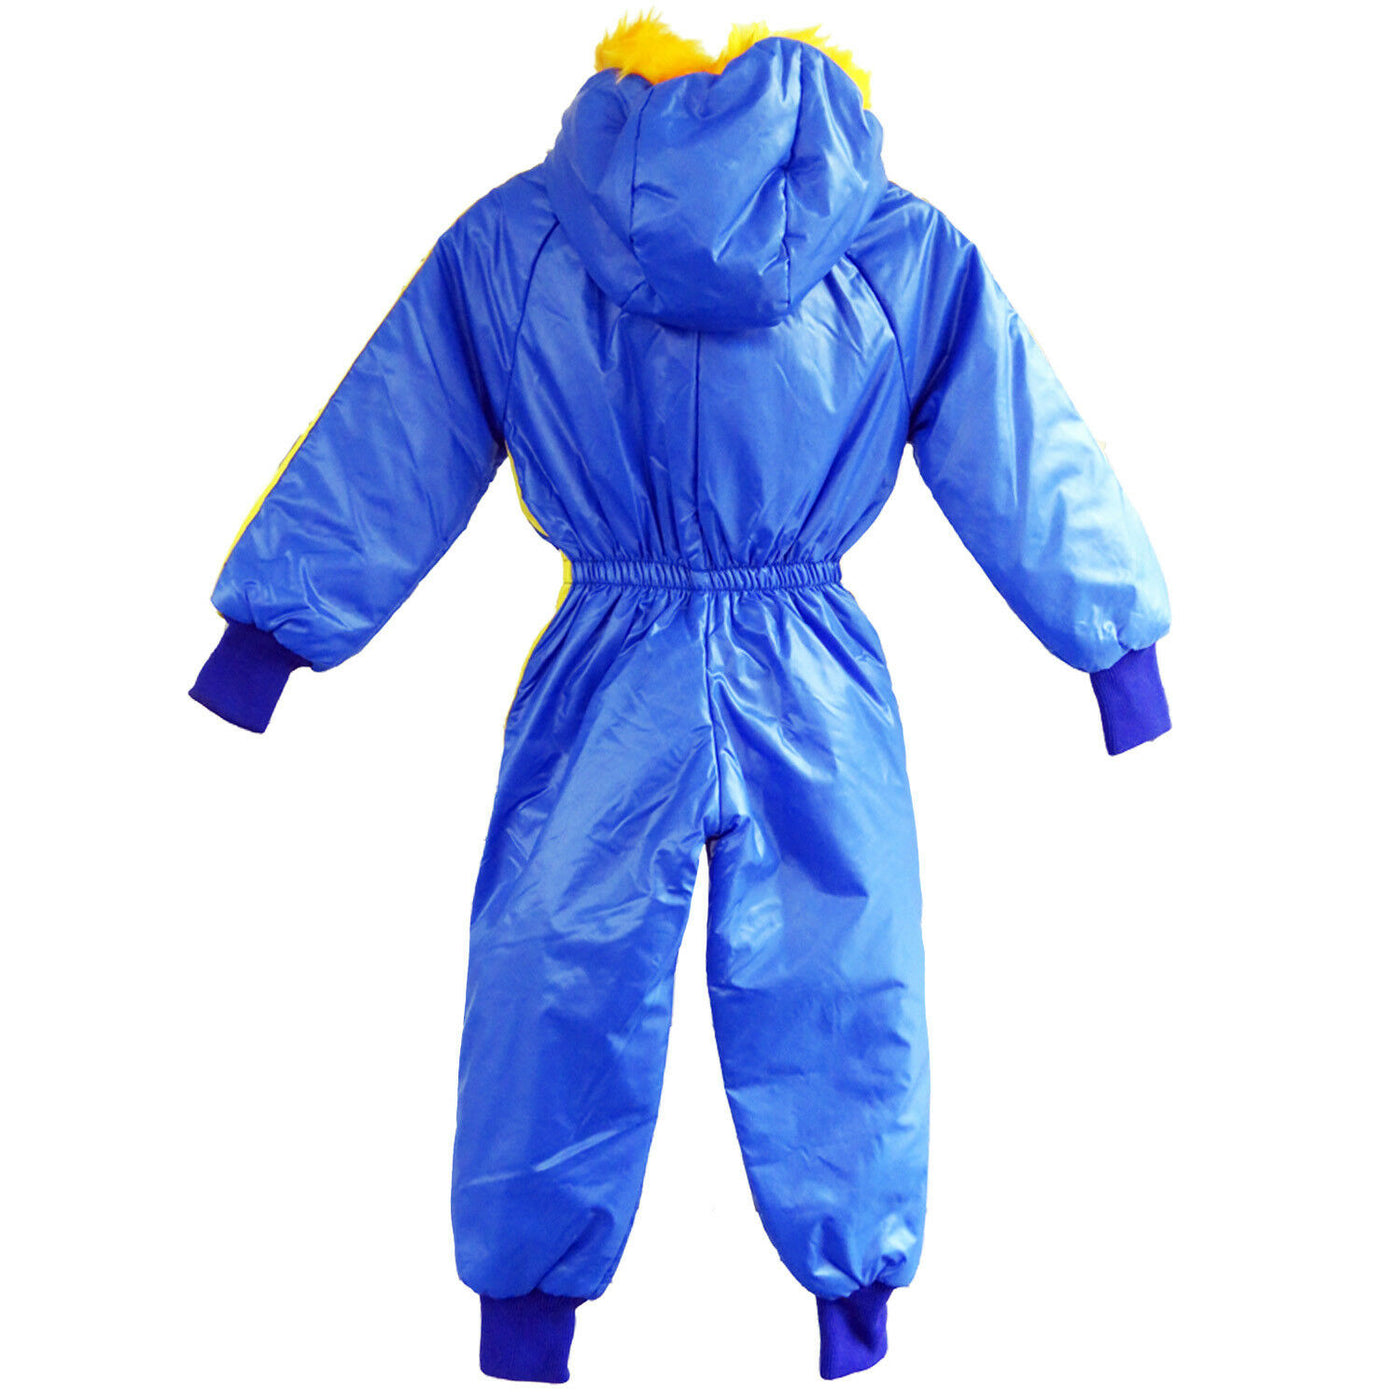 Kids waterproof winter rain suit